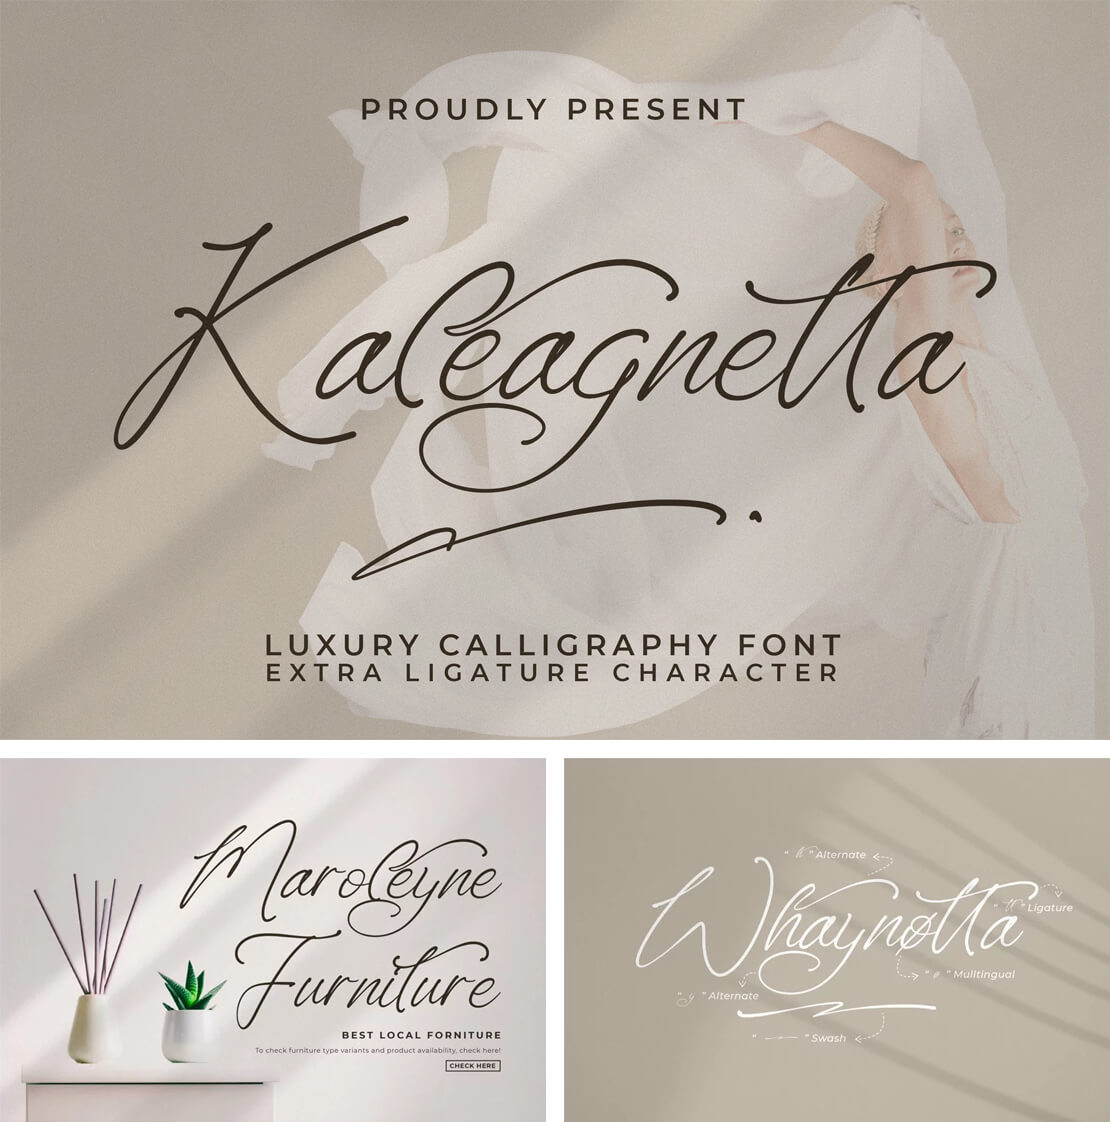 Kaleagnetta Free Font